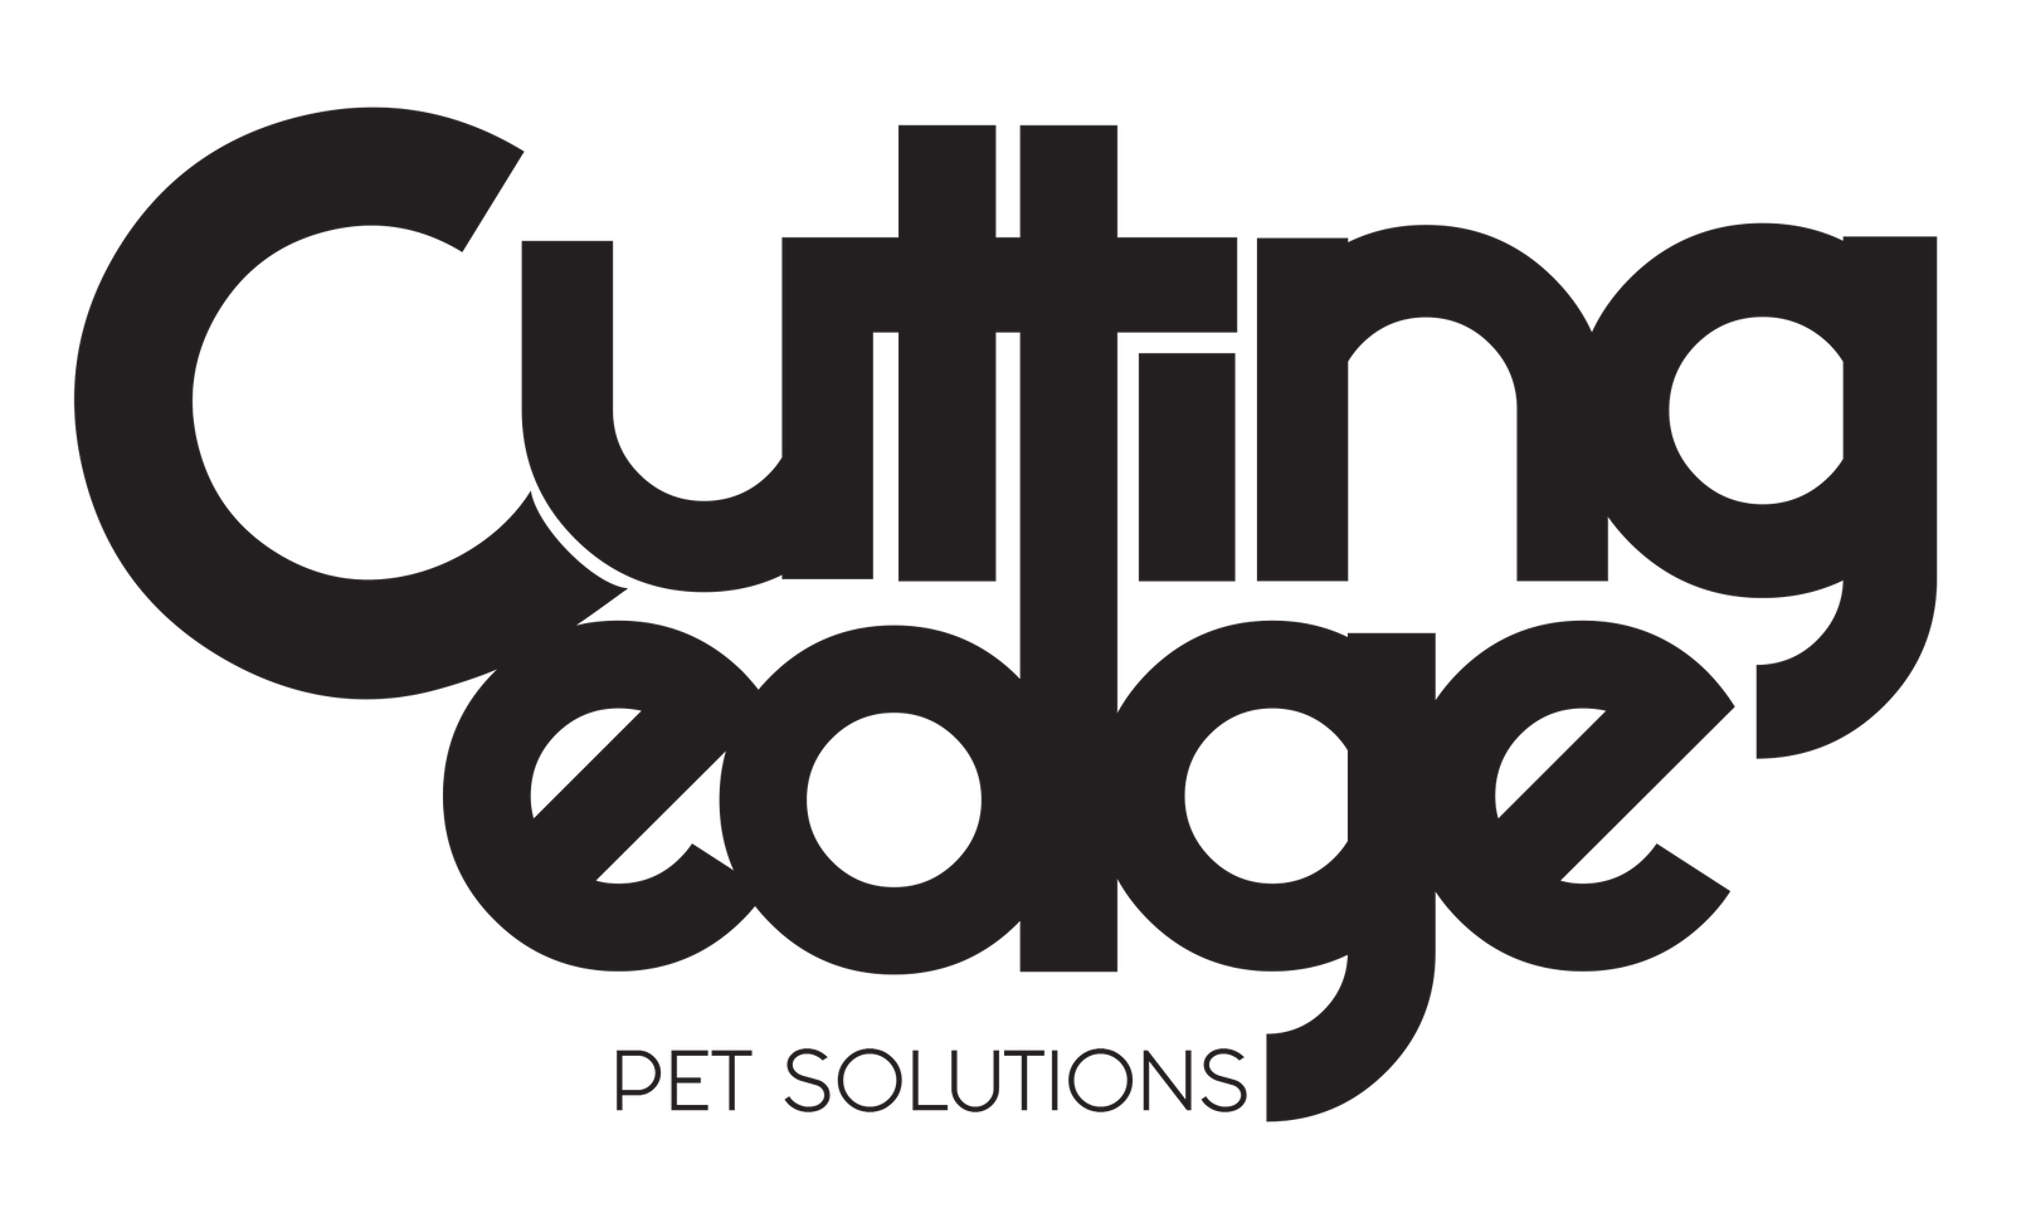 Cutting Edge Pet Solutions